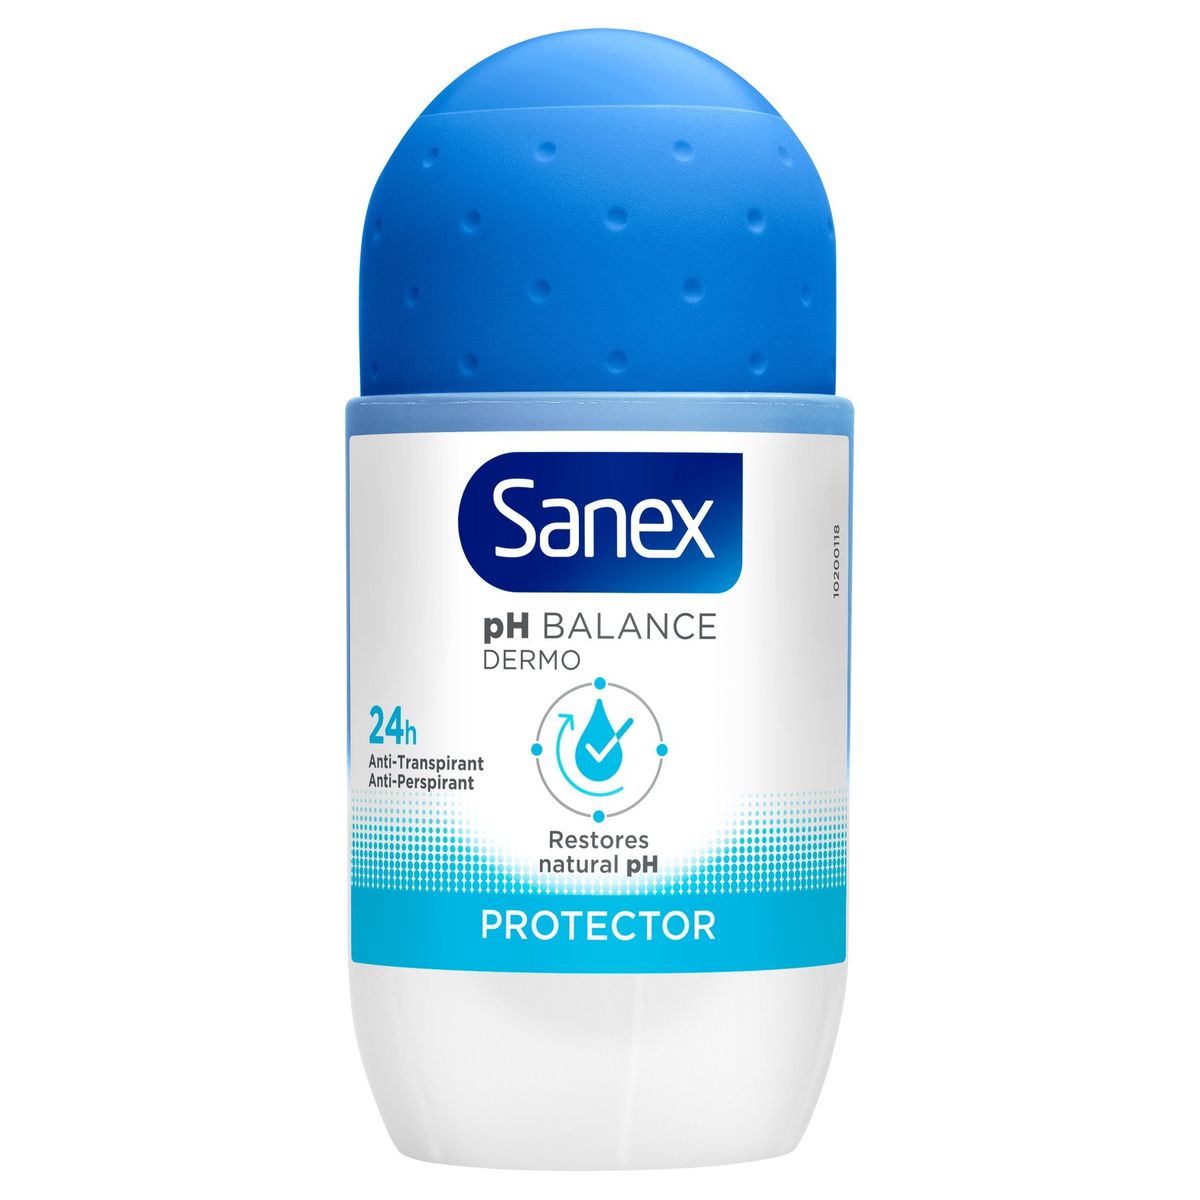 Sanex déodorant anti-transpirant Dermo Protector roll 24h 50ml